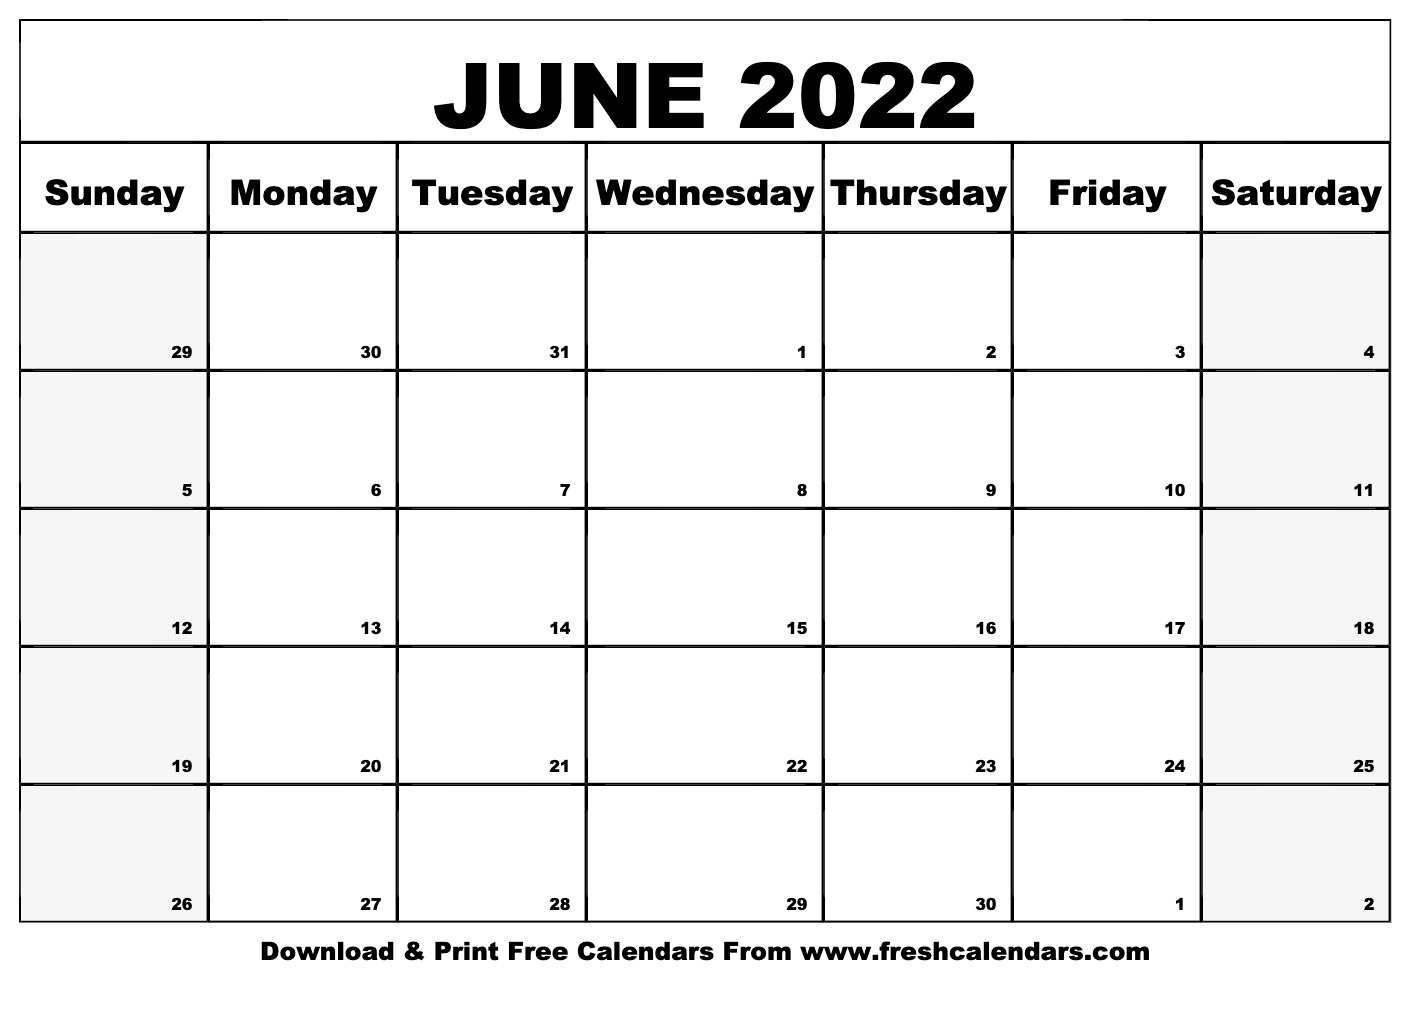 Get Calendar For 2022 June